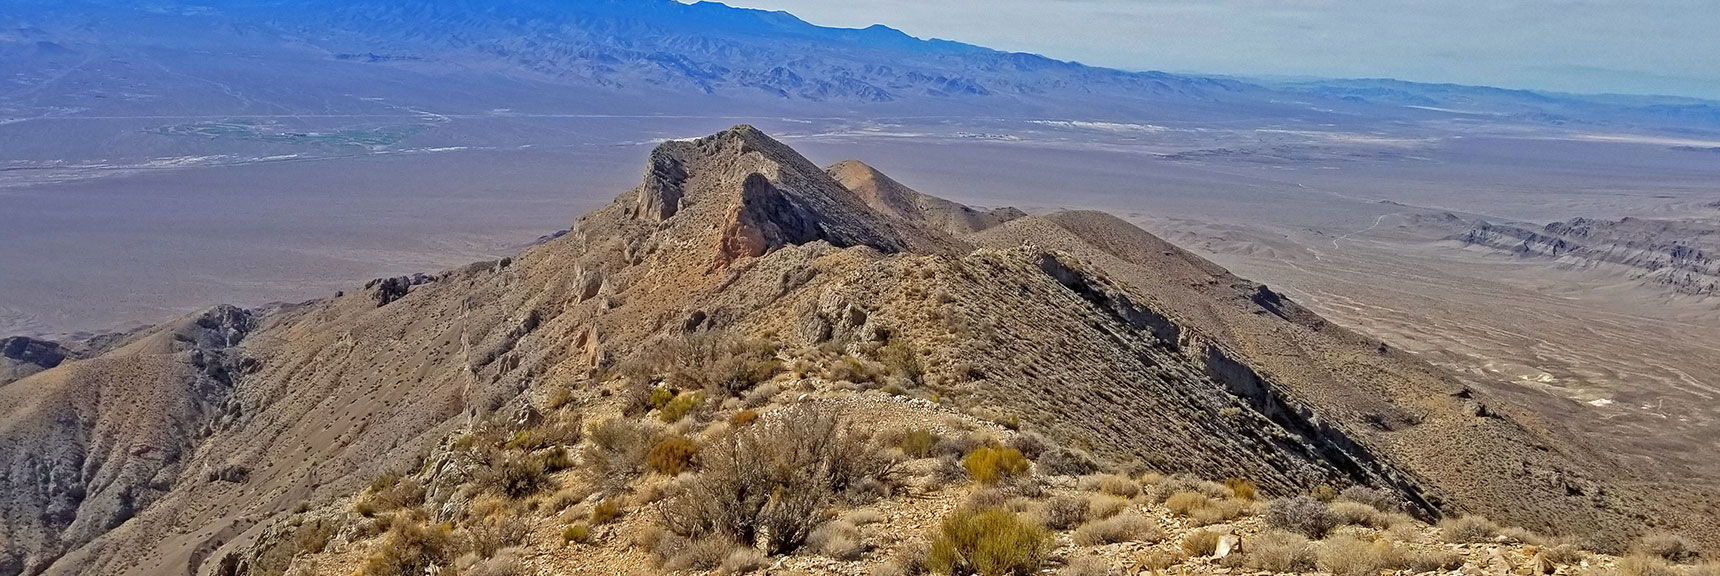 Heading Toward "The Gass Peak Gauntlet" - Ridge Between Eastern and Mid-Summit Area. | Gass Peak Grand Crossing | Desert National Wildlife Refuge to Centennial Hills Las Vegas via Gass Peak Summit by Foot